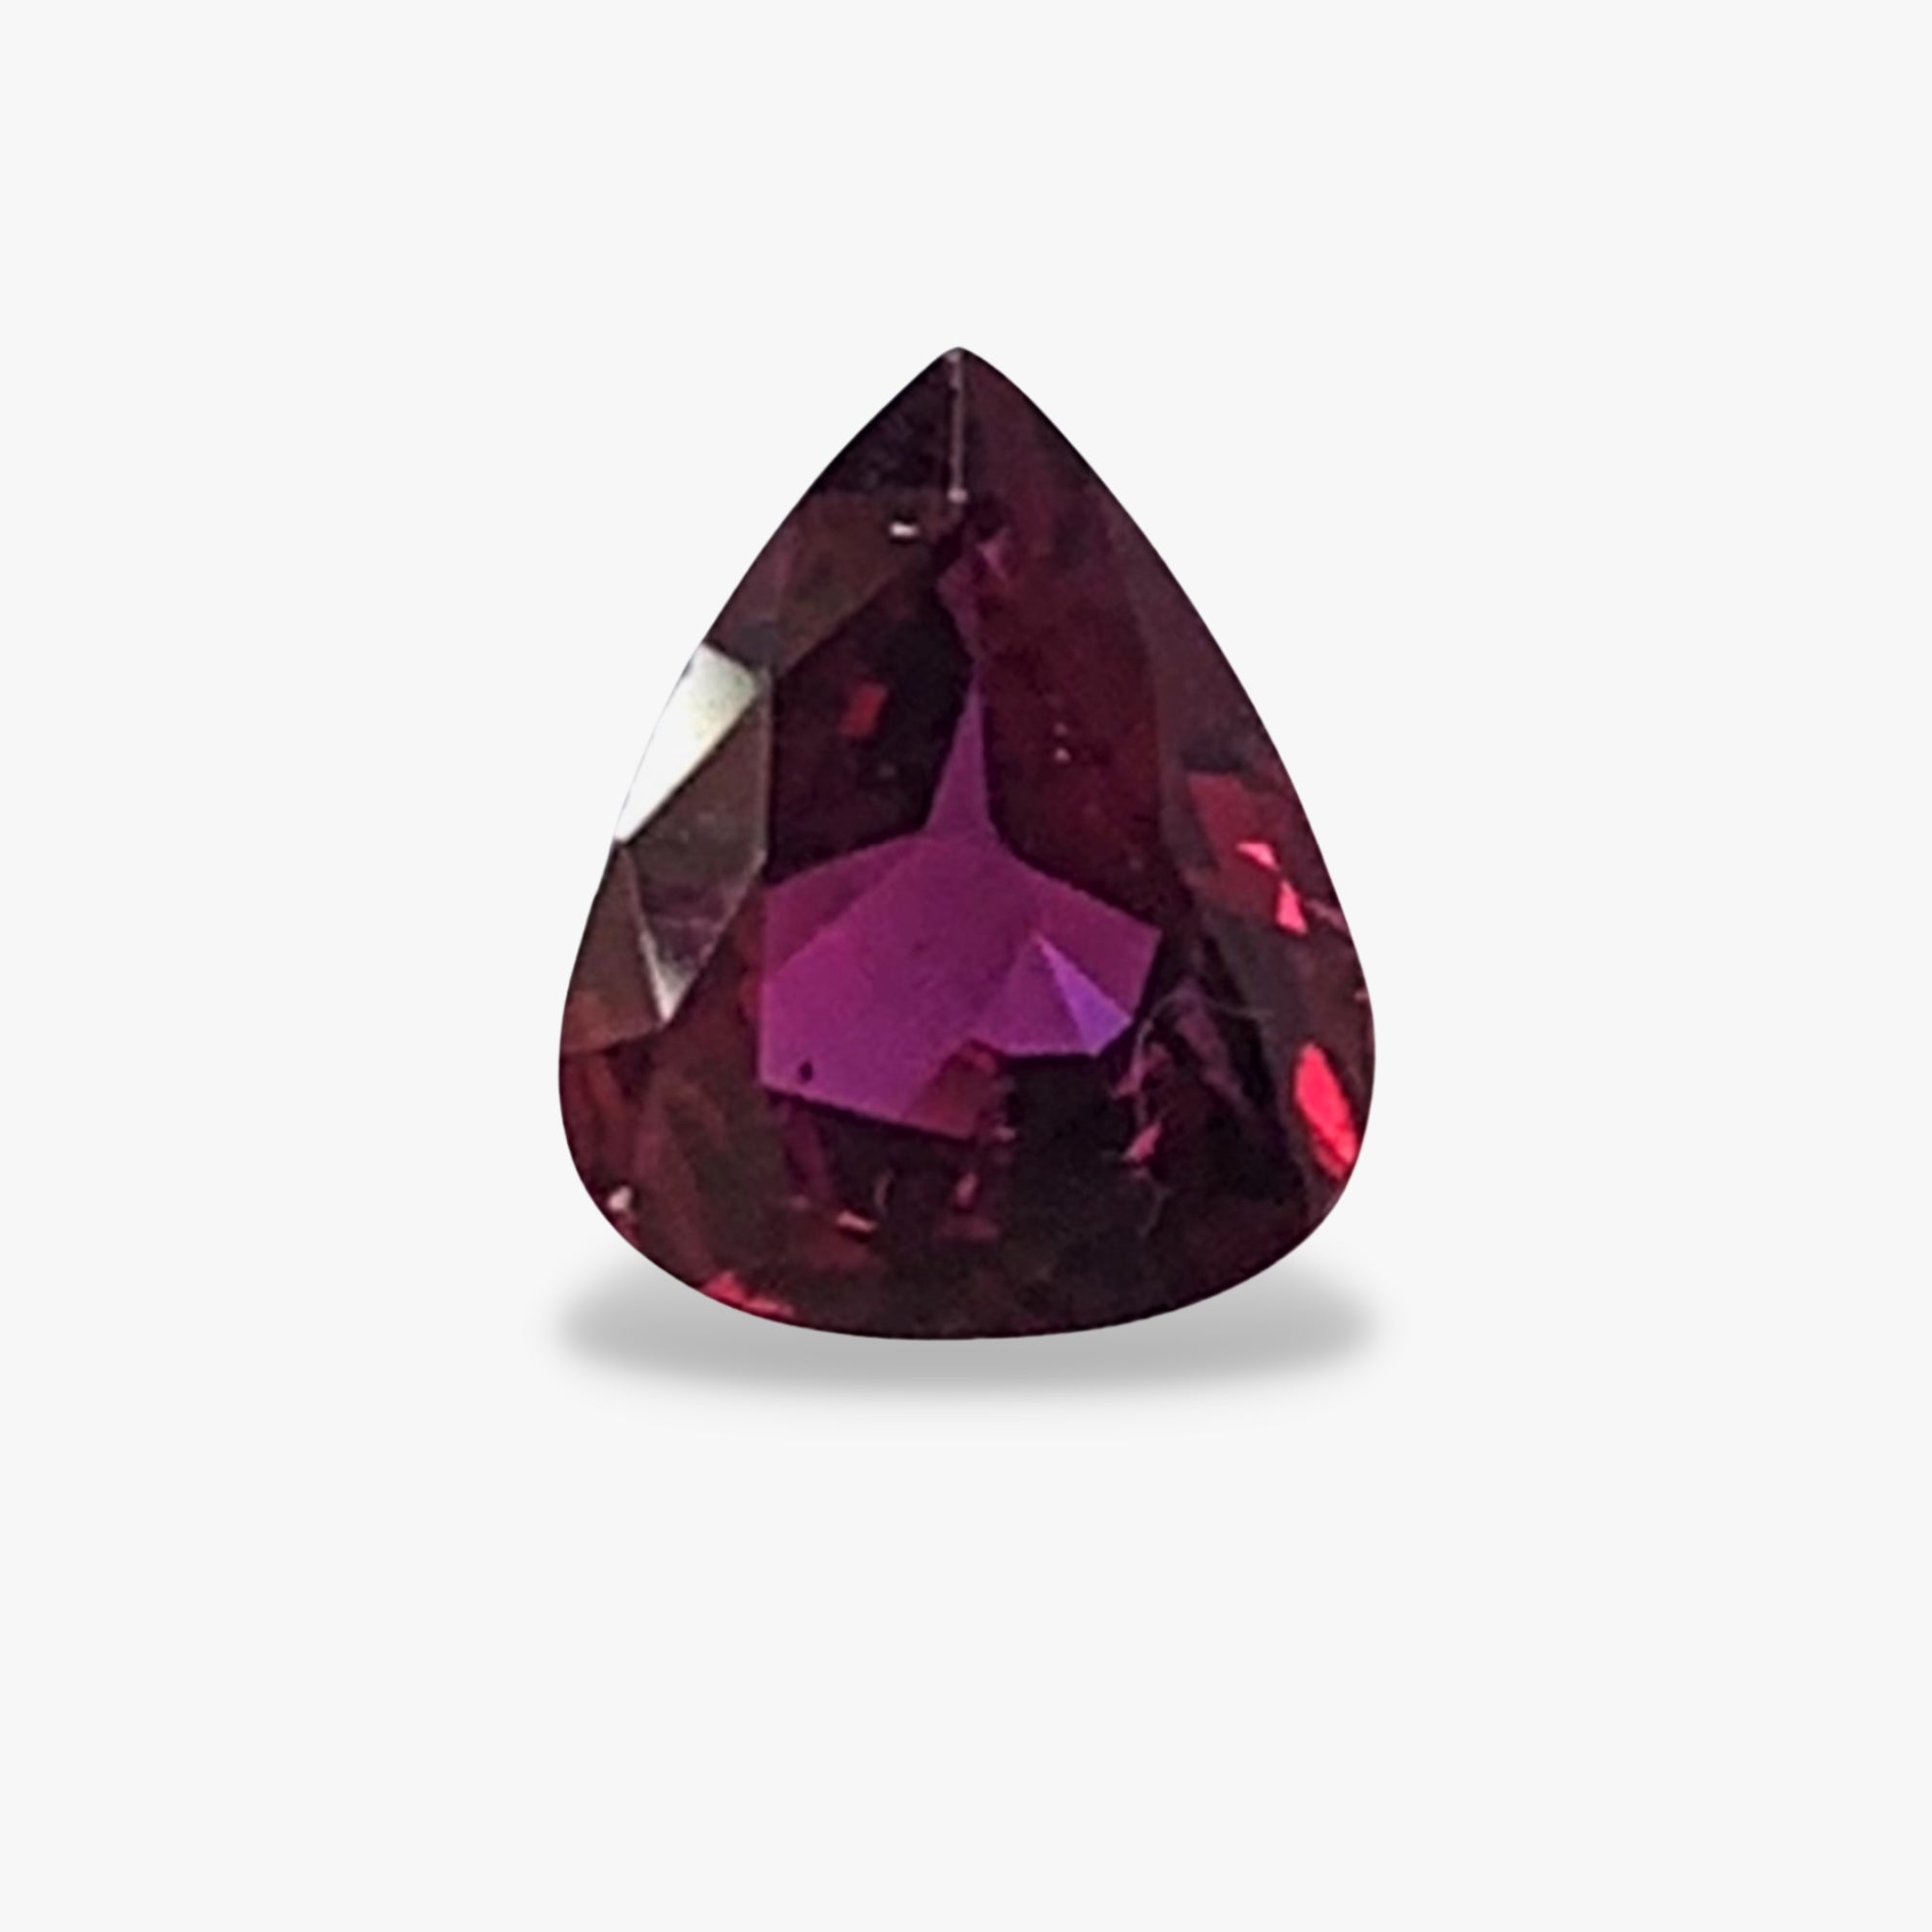 3.11 Carat Pear-Shaped Unheated Thai Ruby